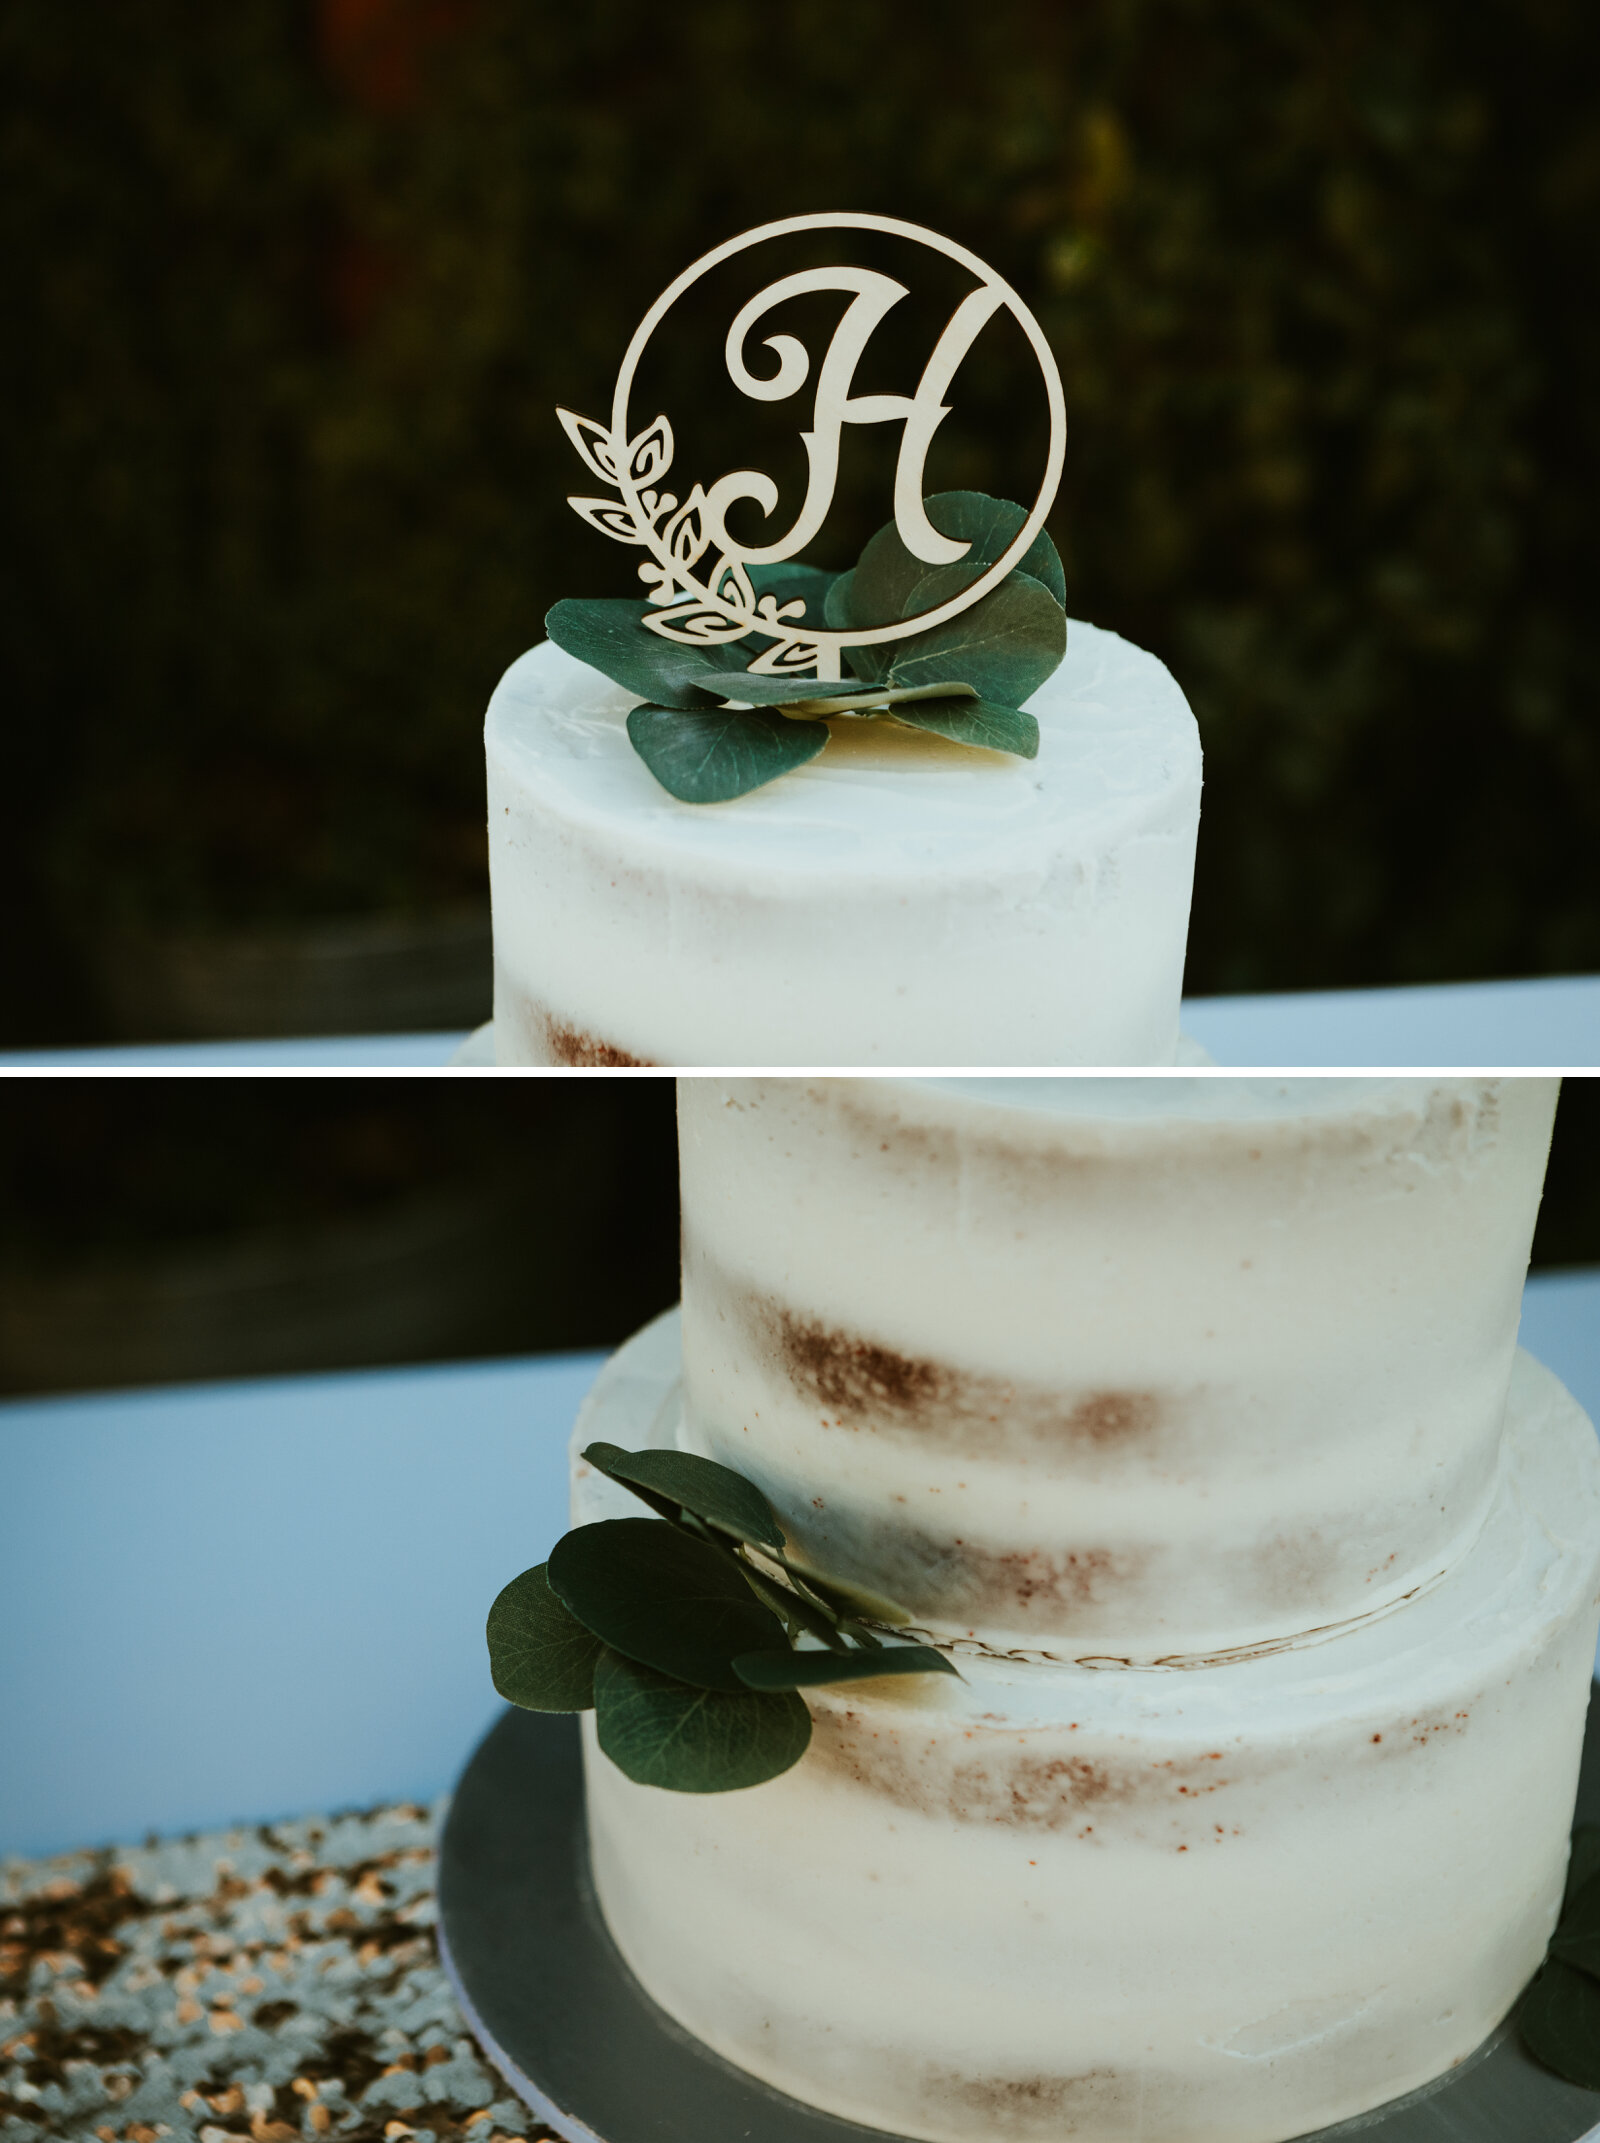 GRAND HIGHLAND HOTEL PRESCOTT ARIZONA WEDDING PHOTOGRAPHY CAKE.jpg